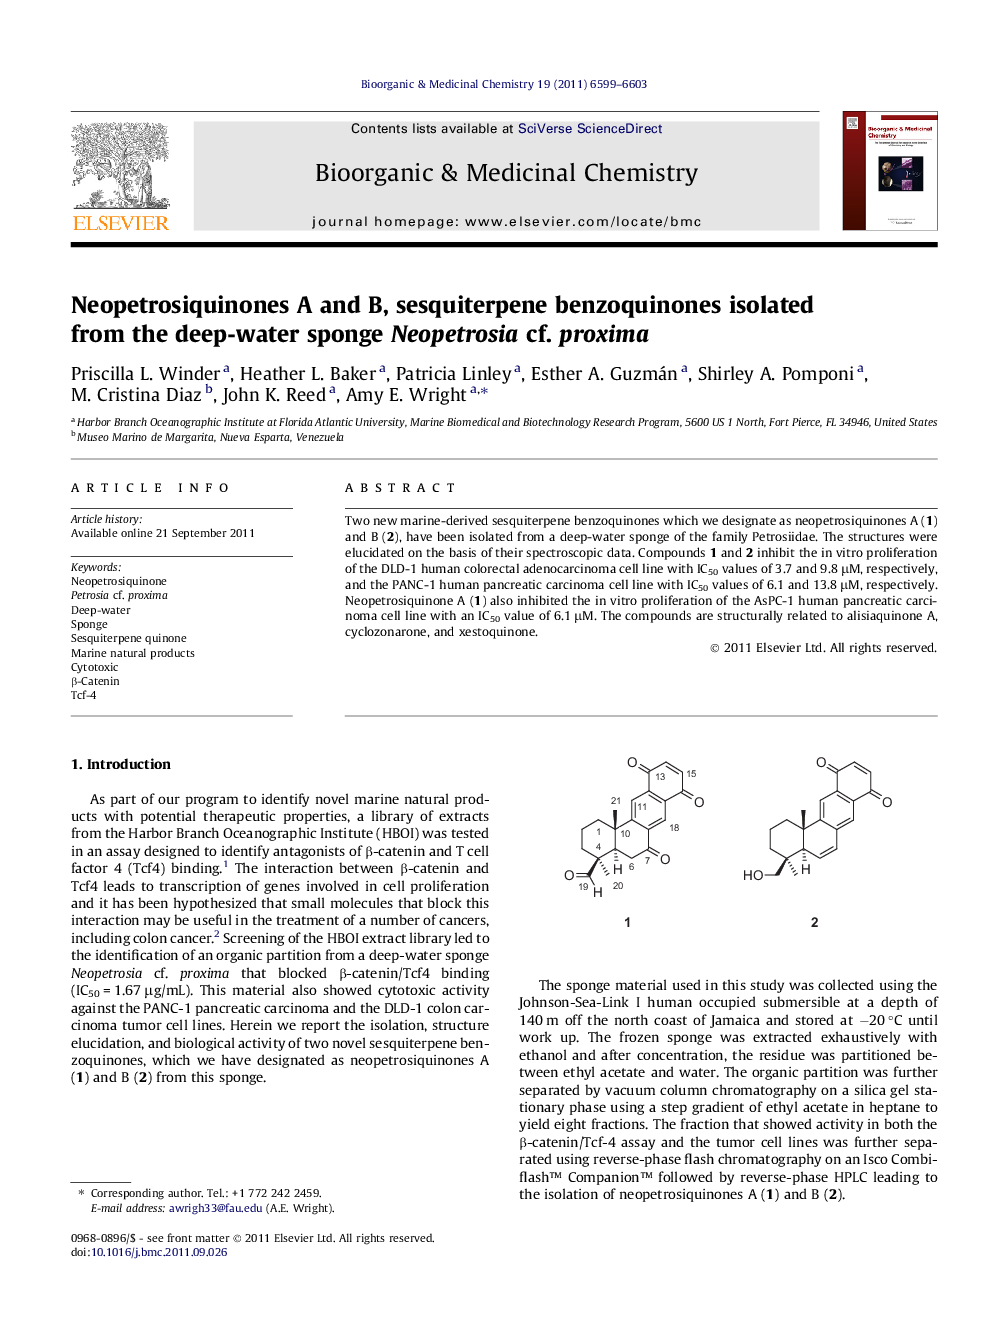 Neopetrosiquinones A and B, sesquiterpene benzoquinones isolated from the deep-water sponge Neopetrosia cf. proxima